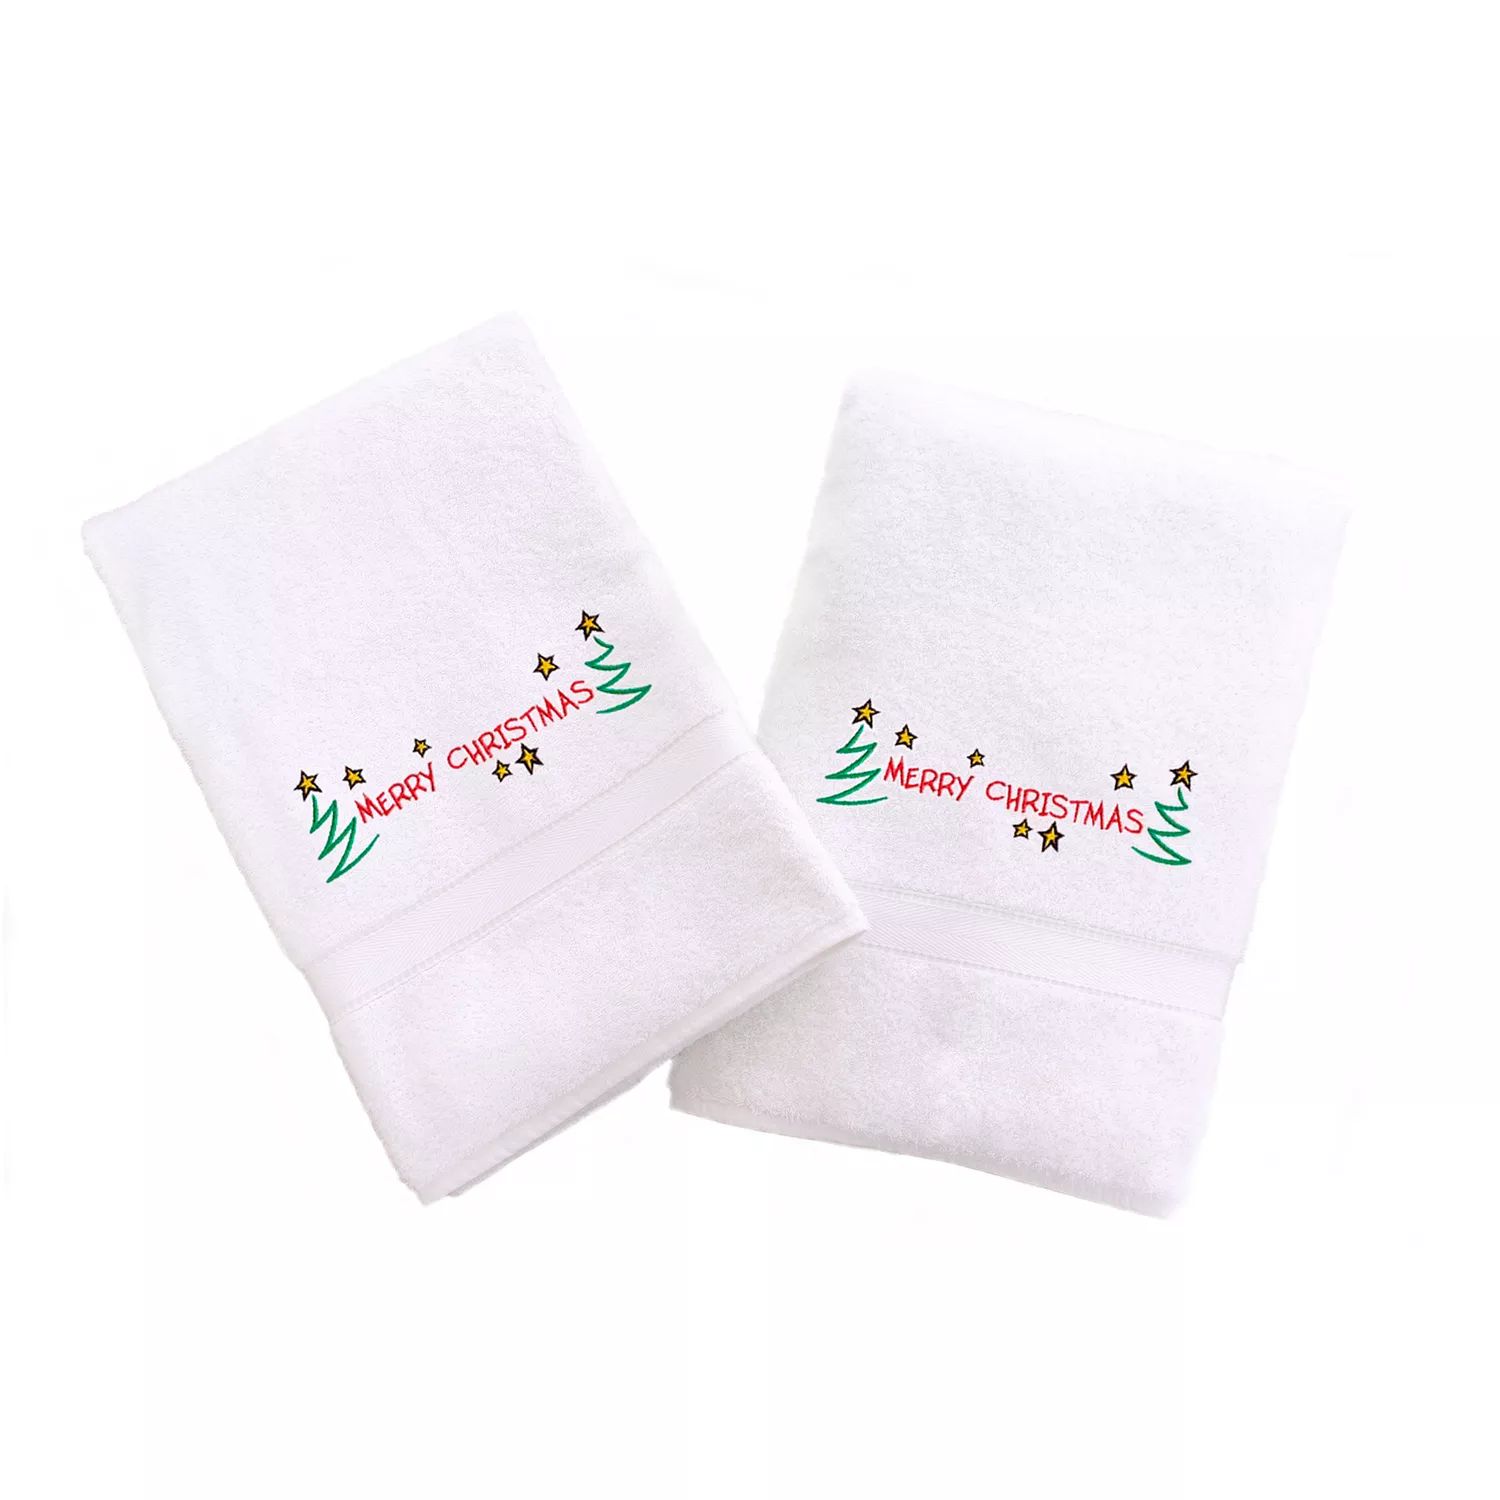 Linum Home Textiles Праздничные полотенца для рук с вышивкой бордюром, 2 упаковки chatterton chris merry christmas gus